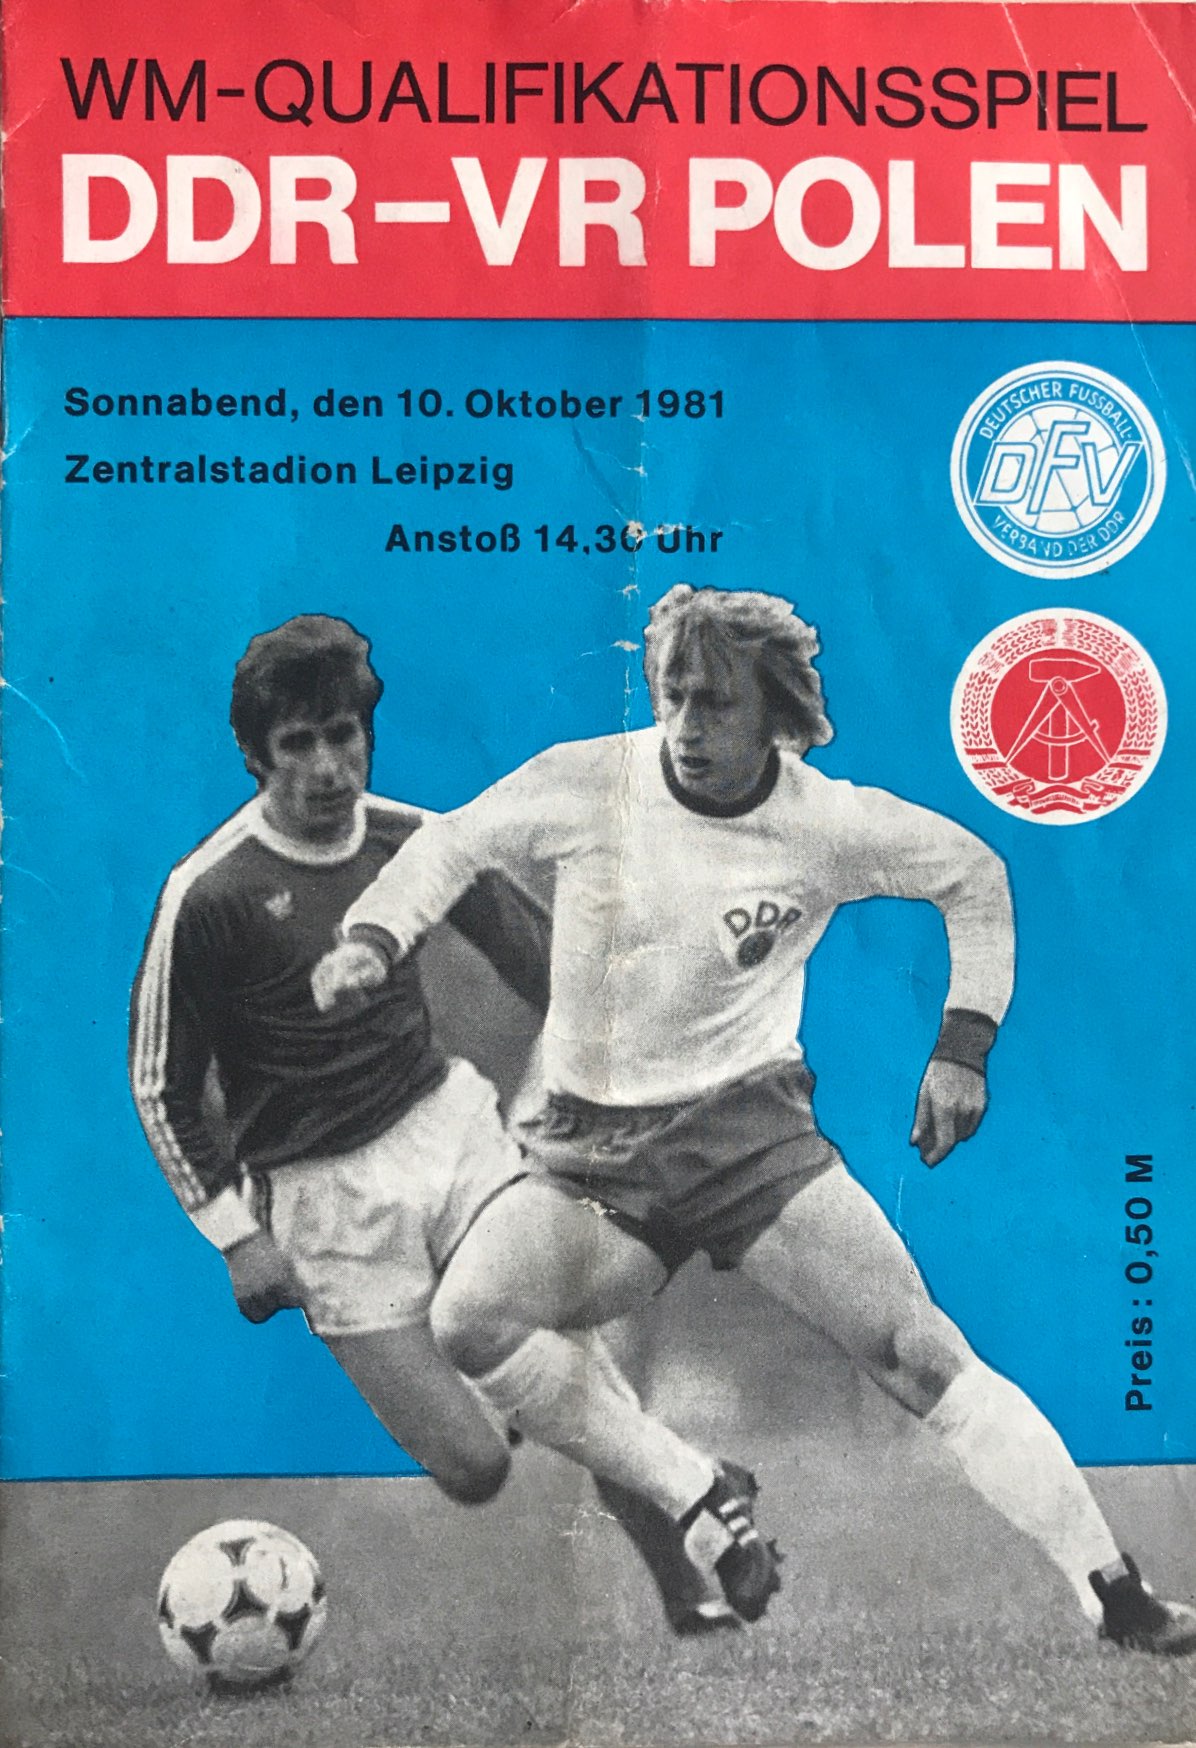 Program meczowy NRD - Polska 2:3 (10.10.1981).